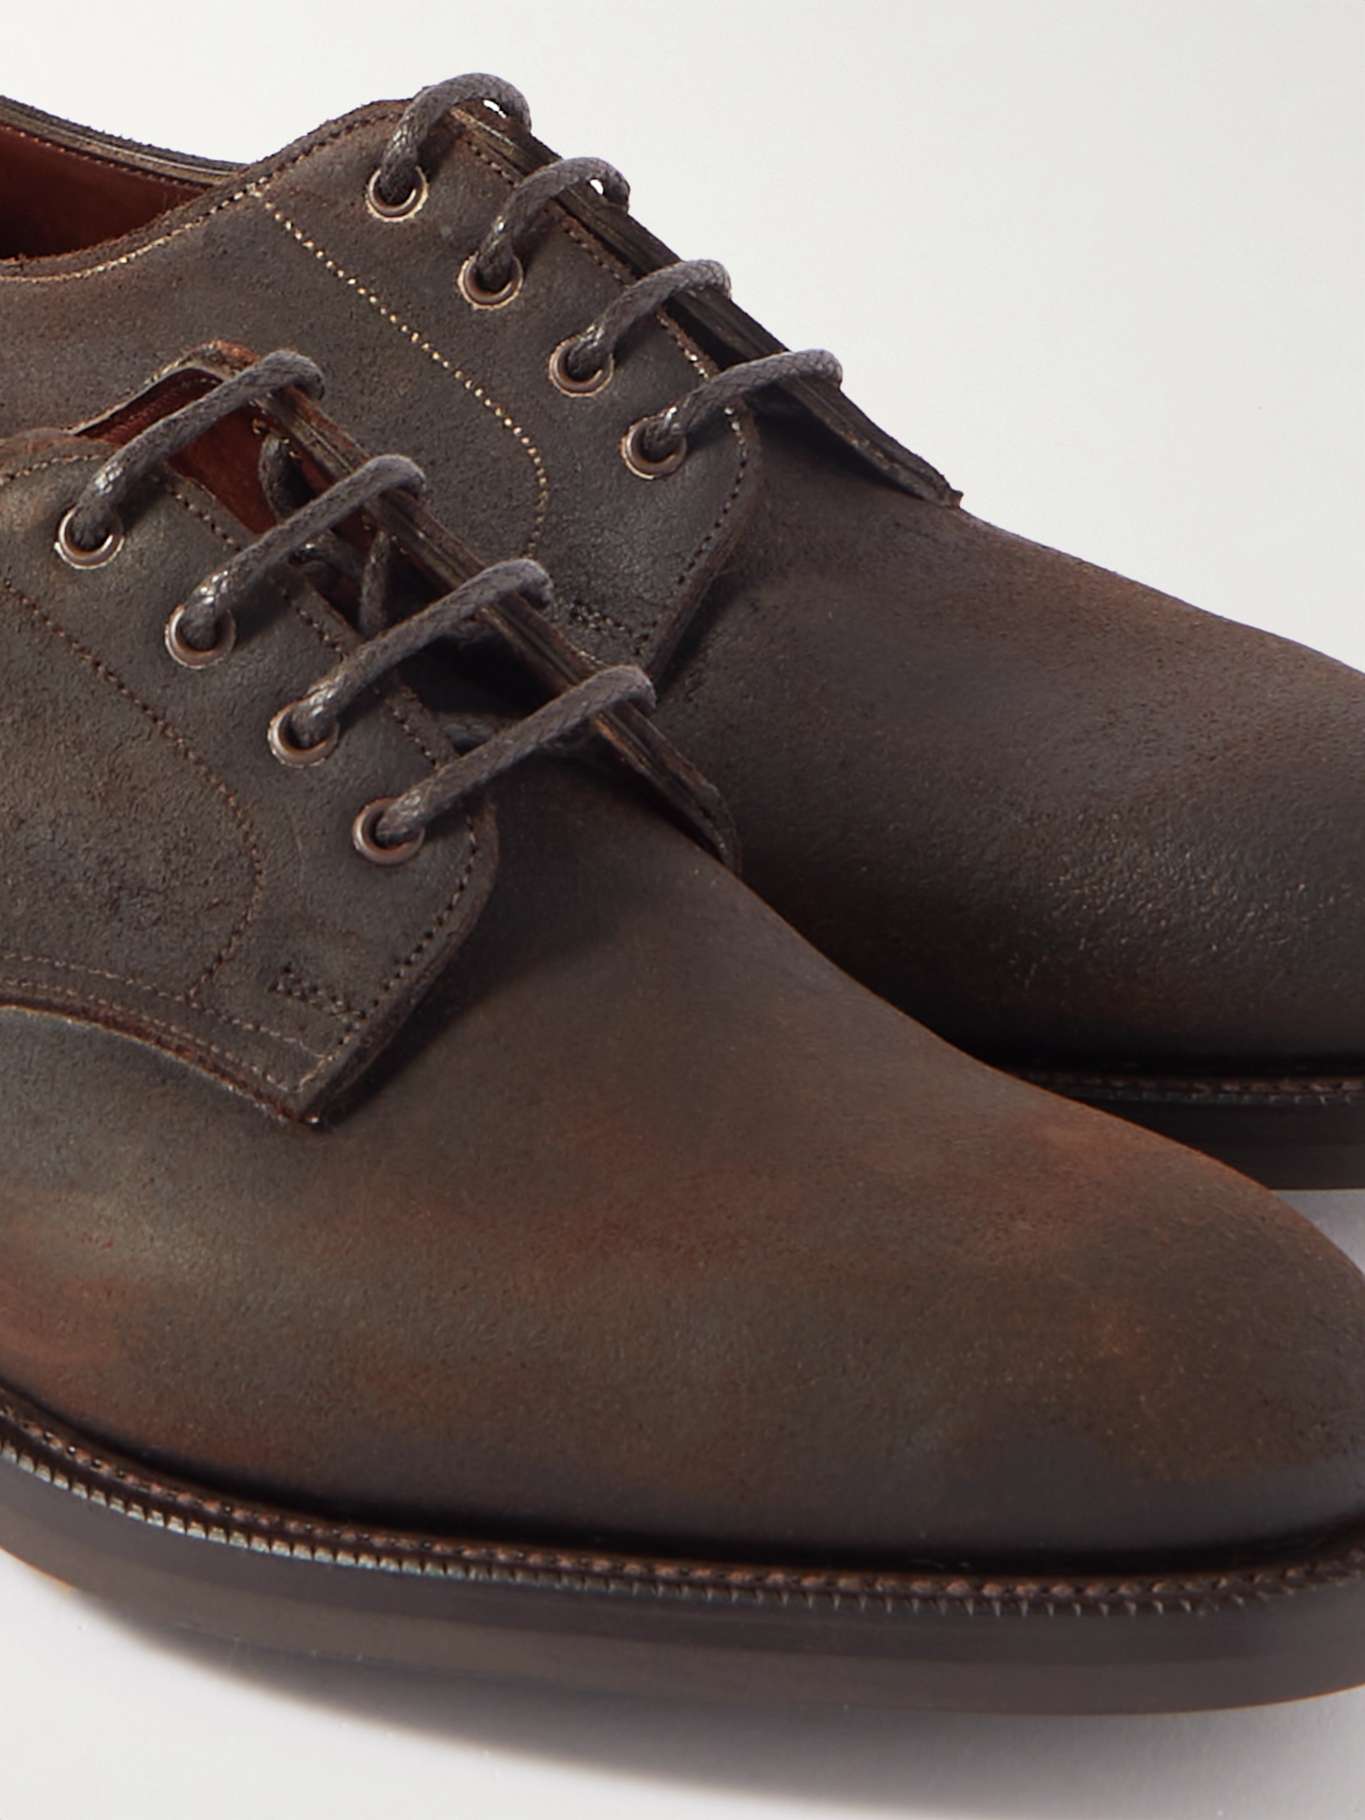 EDWARD GREEN Leith Suede Derby Shoes for Men | MR PORTER